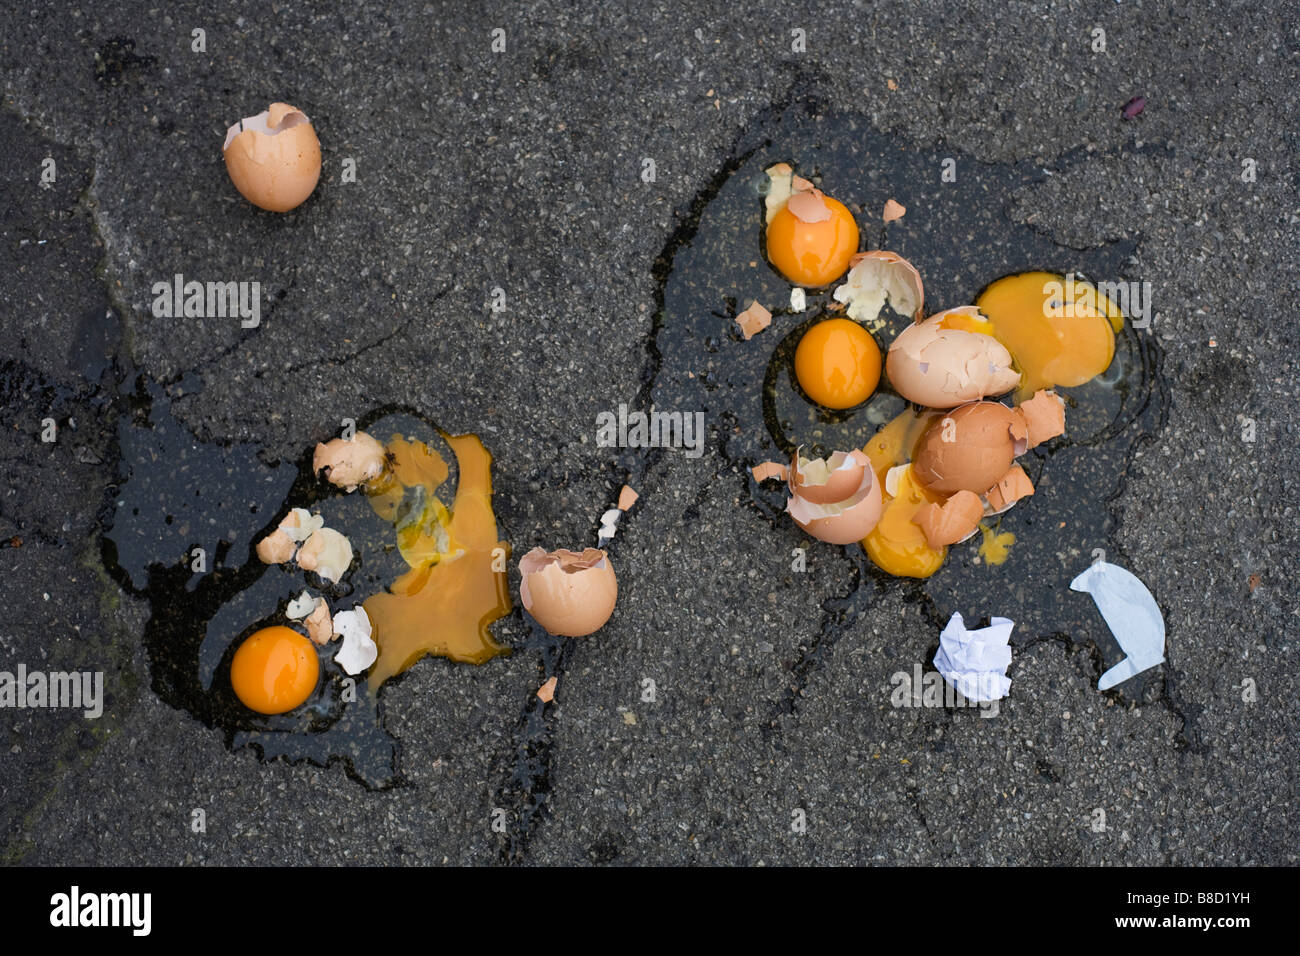 Broken eggs dropped on tarmac Stock Photo